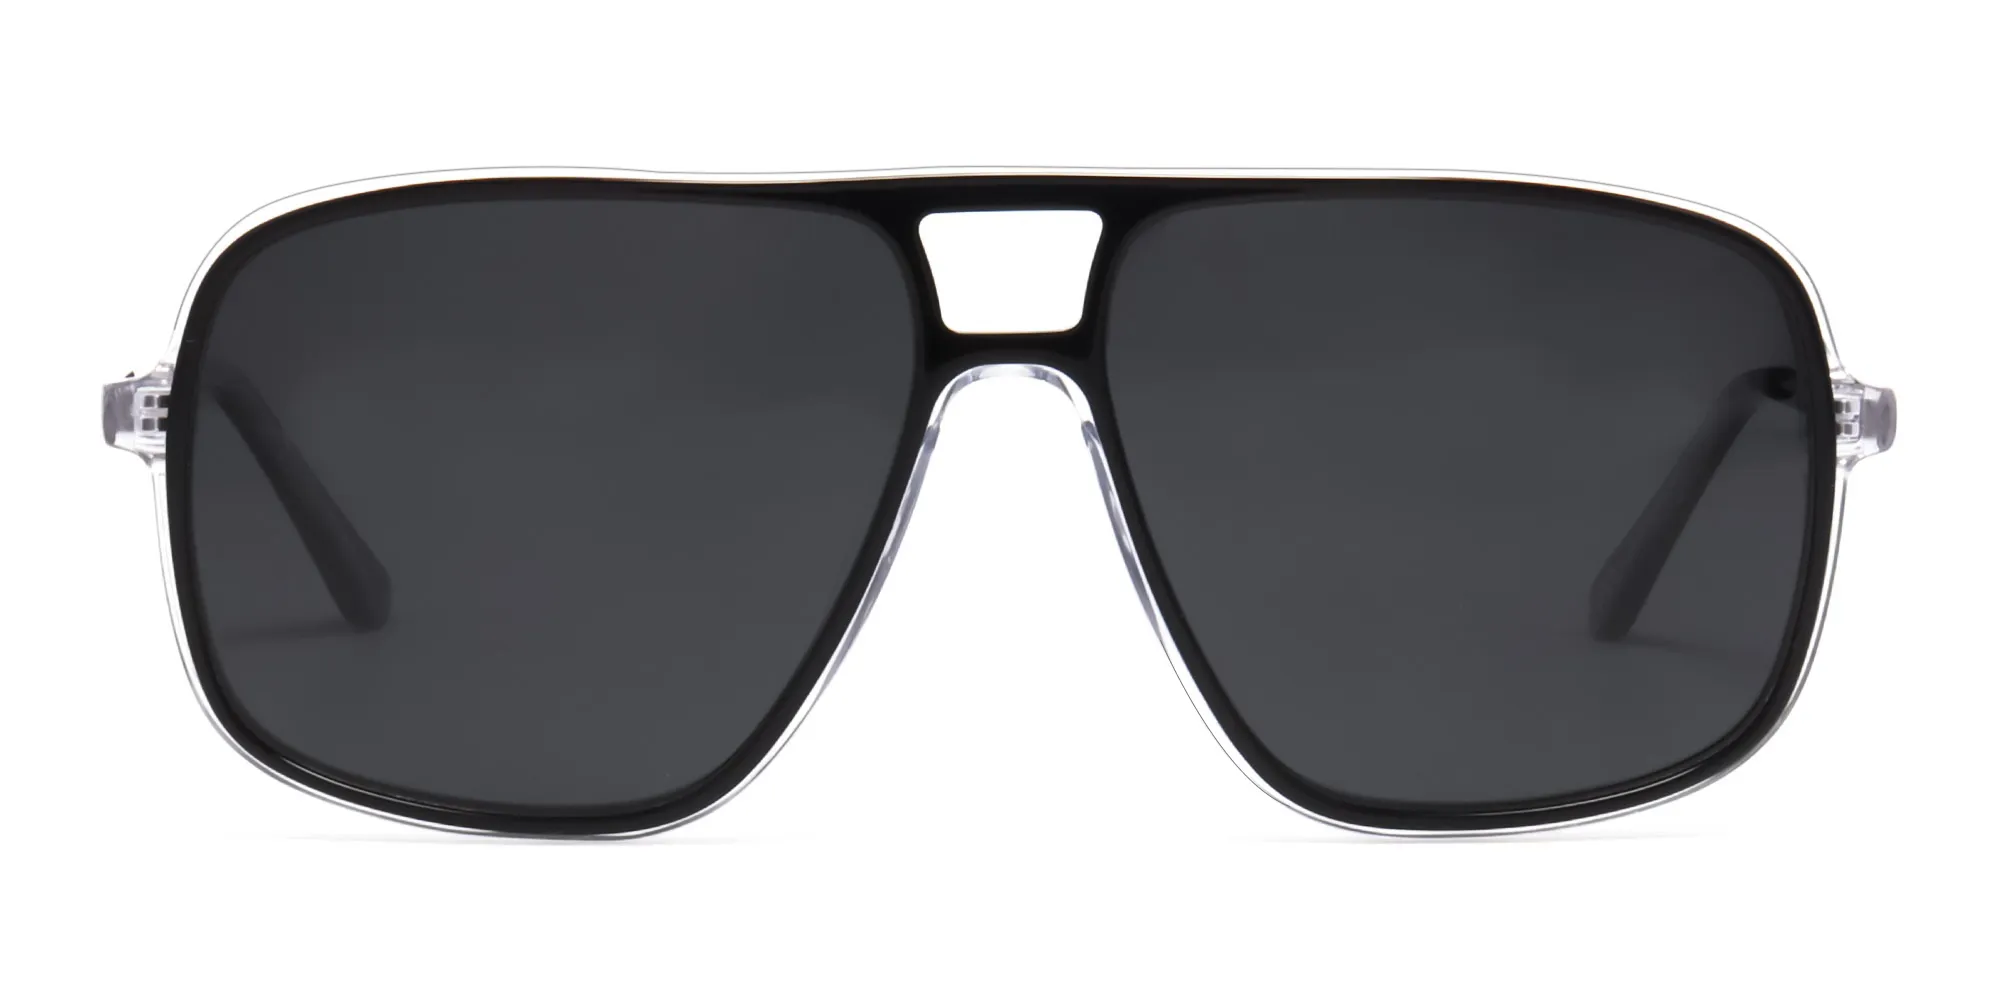 Buy Black Big Size Pilot Sunglasses - Polarised Lenses - Specscart